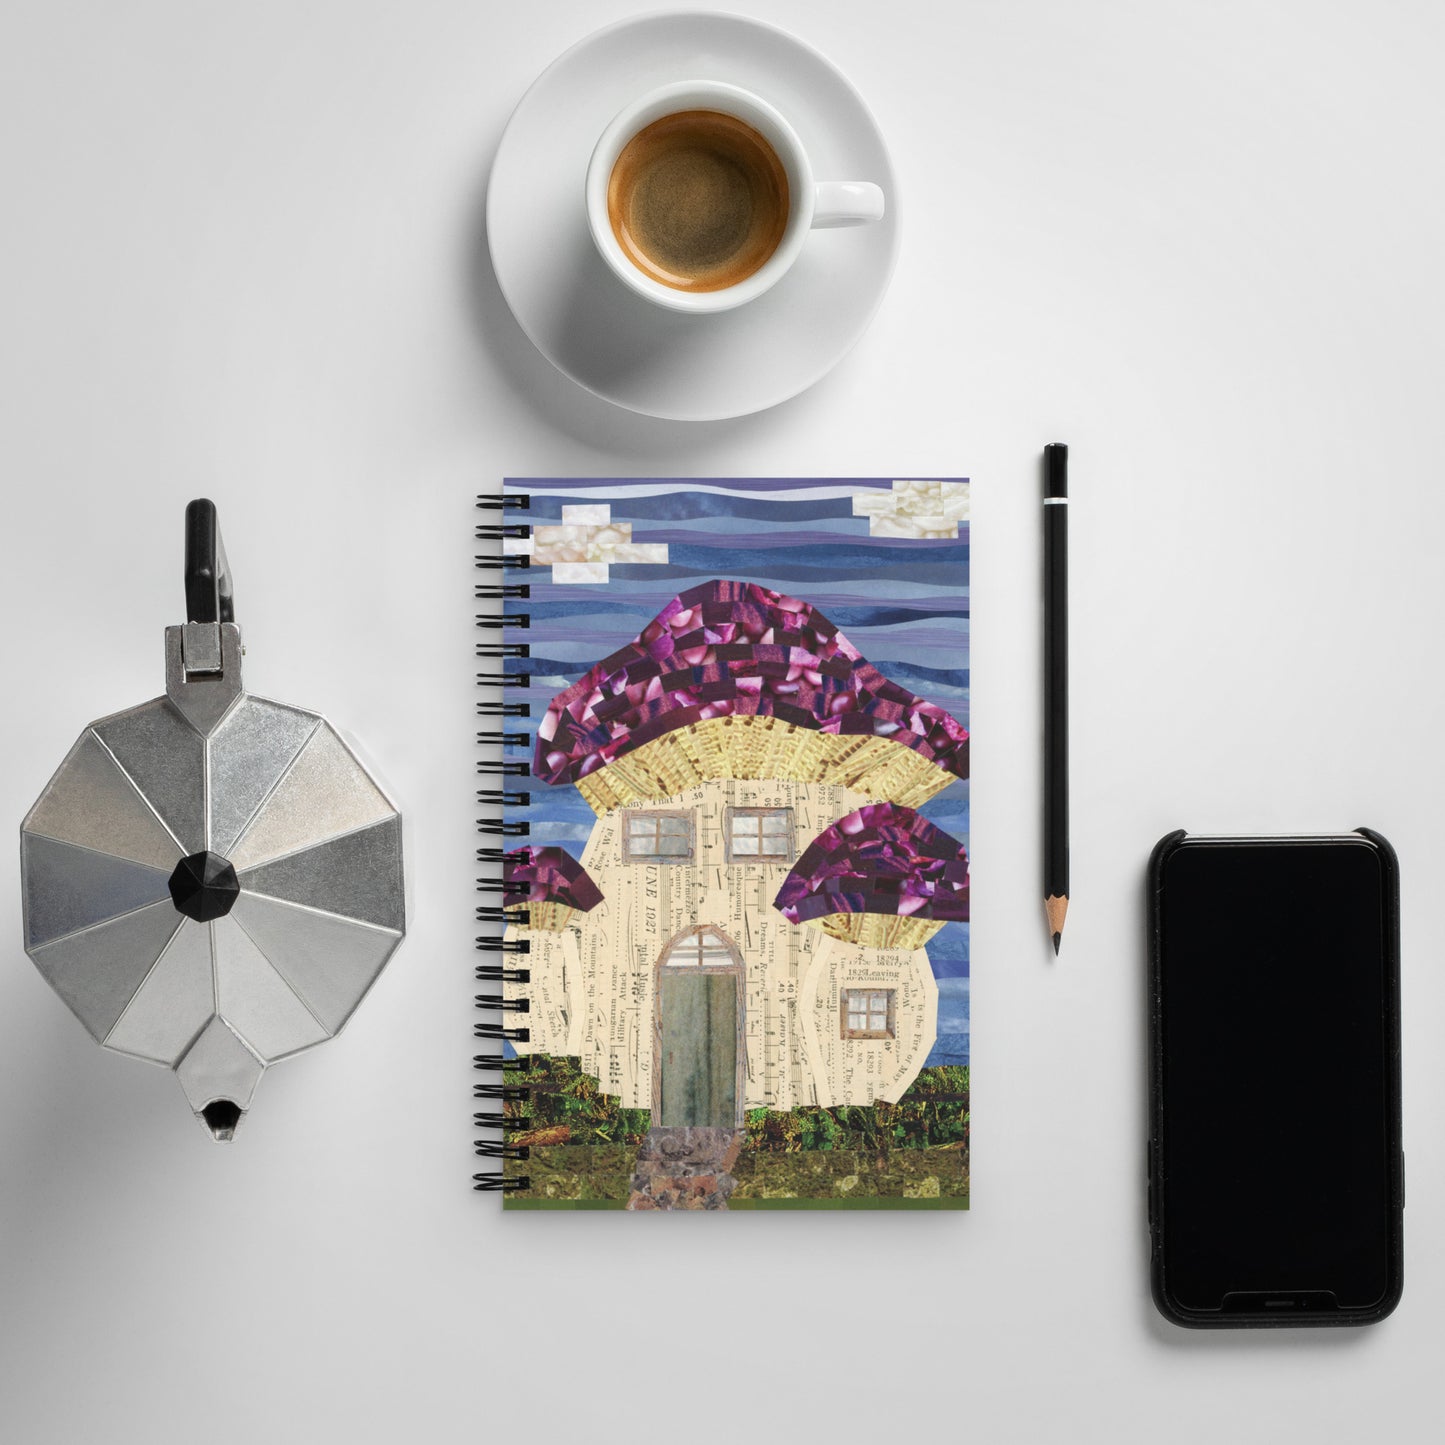 Mushroom House Spiral notebook